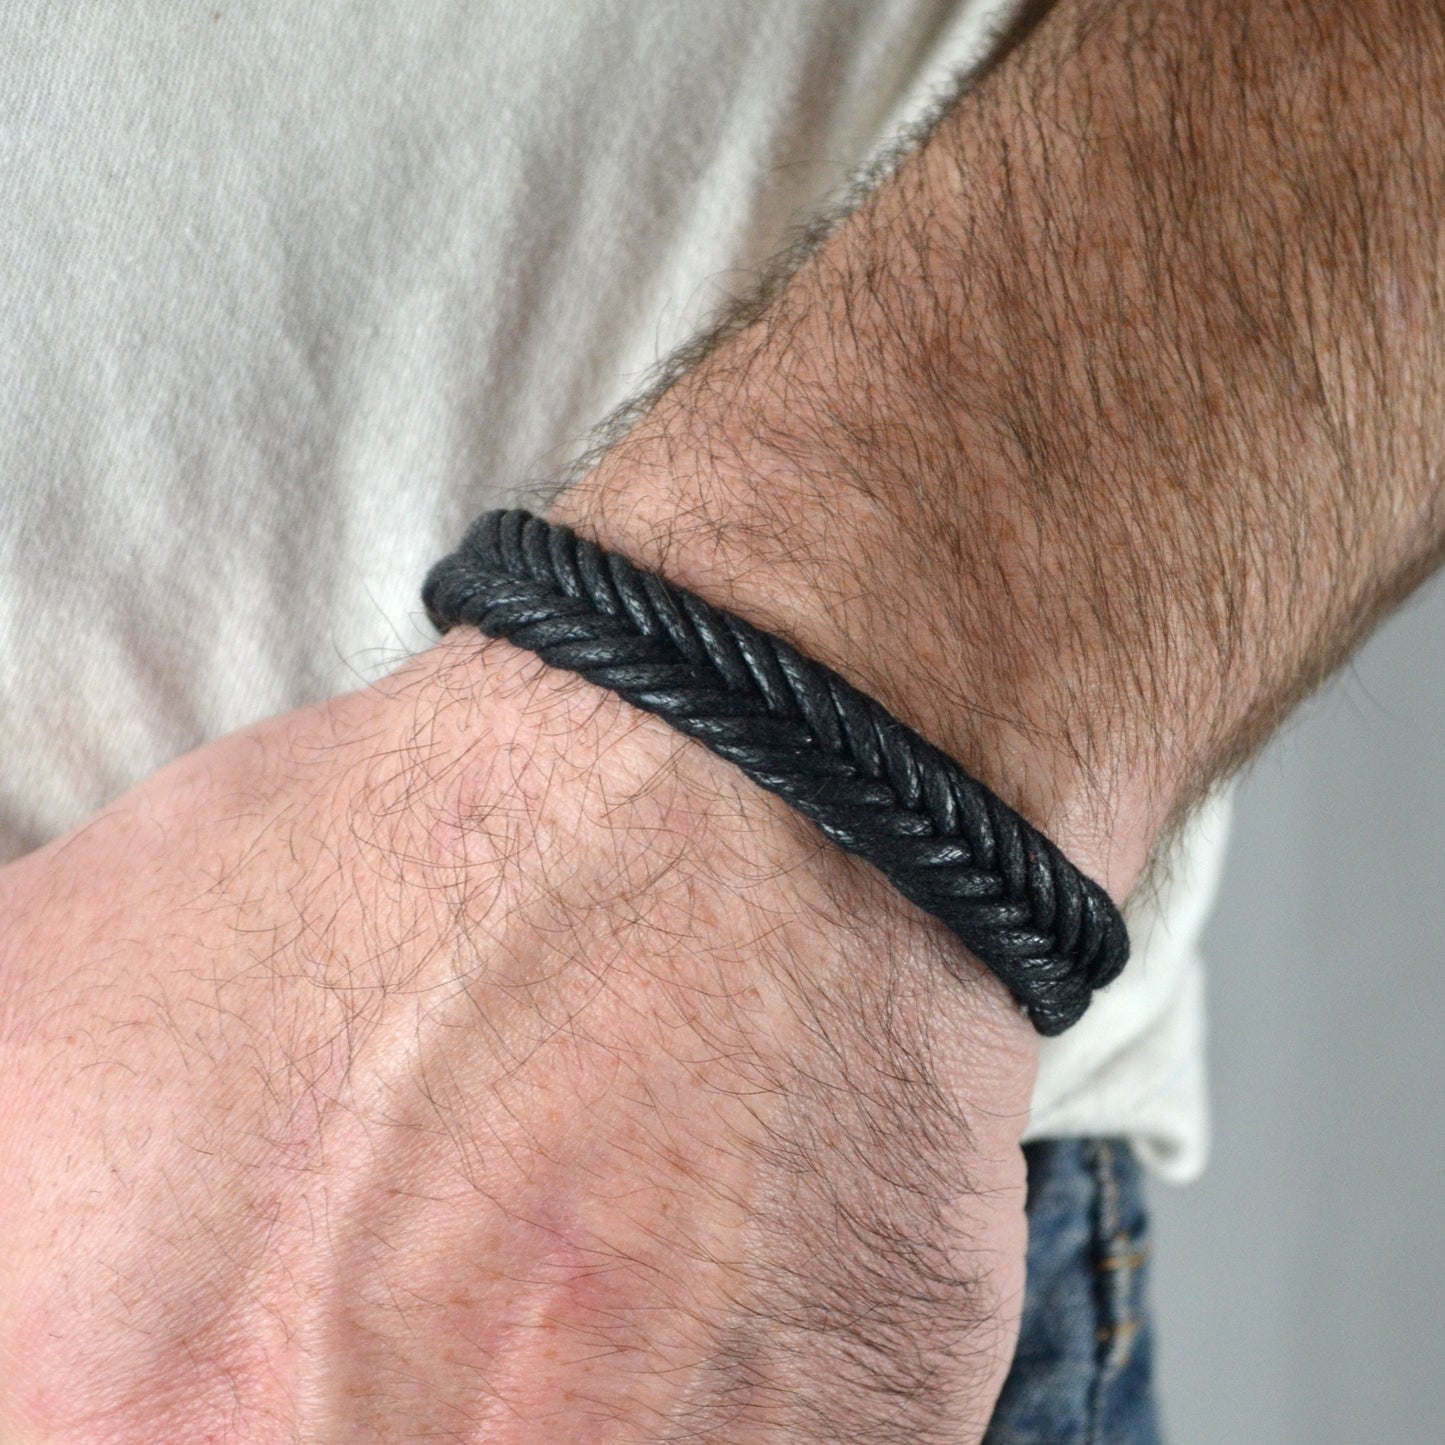 Woven Cord Bracelet